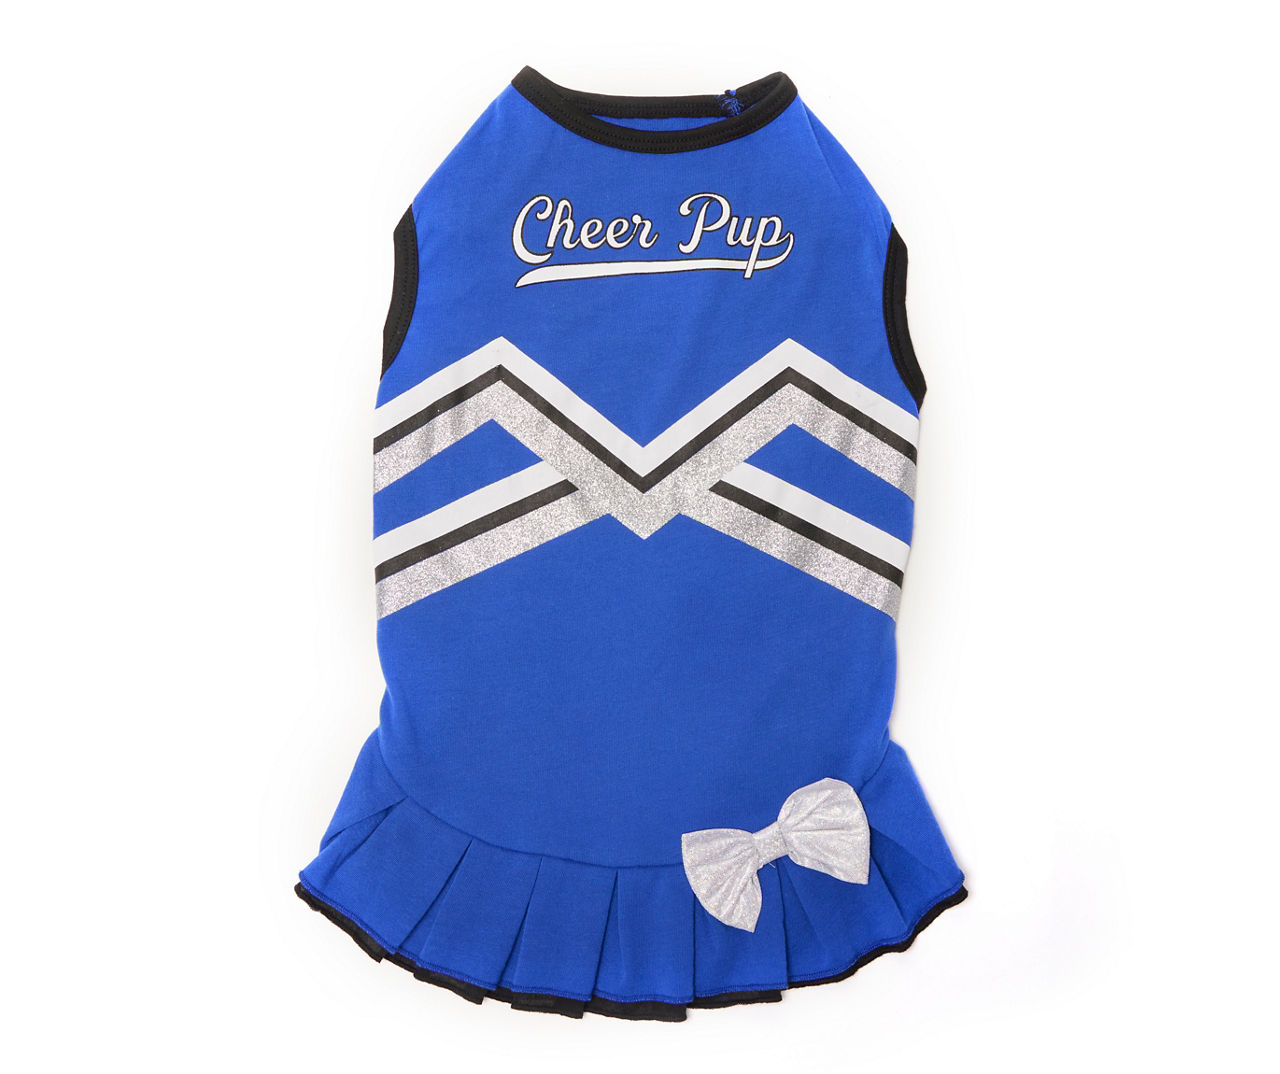 Pet Medium "Cheer Pup" Blue Cheerleader Dress